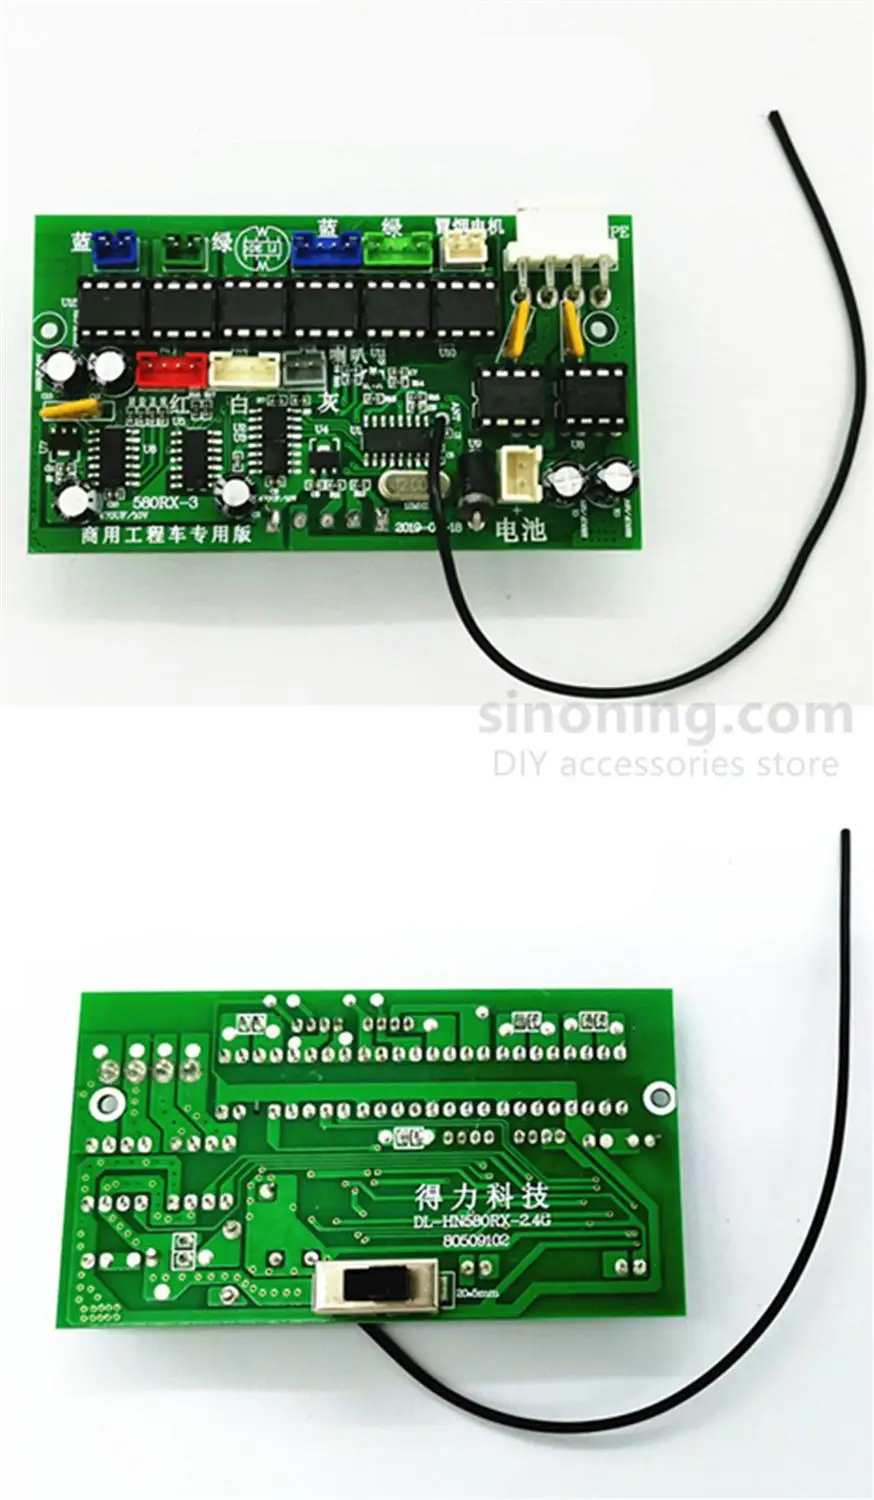 

HS18-580 18 channel remote control receiver advanced model excavator toy car scientific DIY charging remote control set